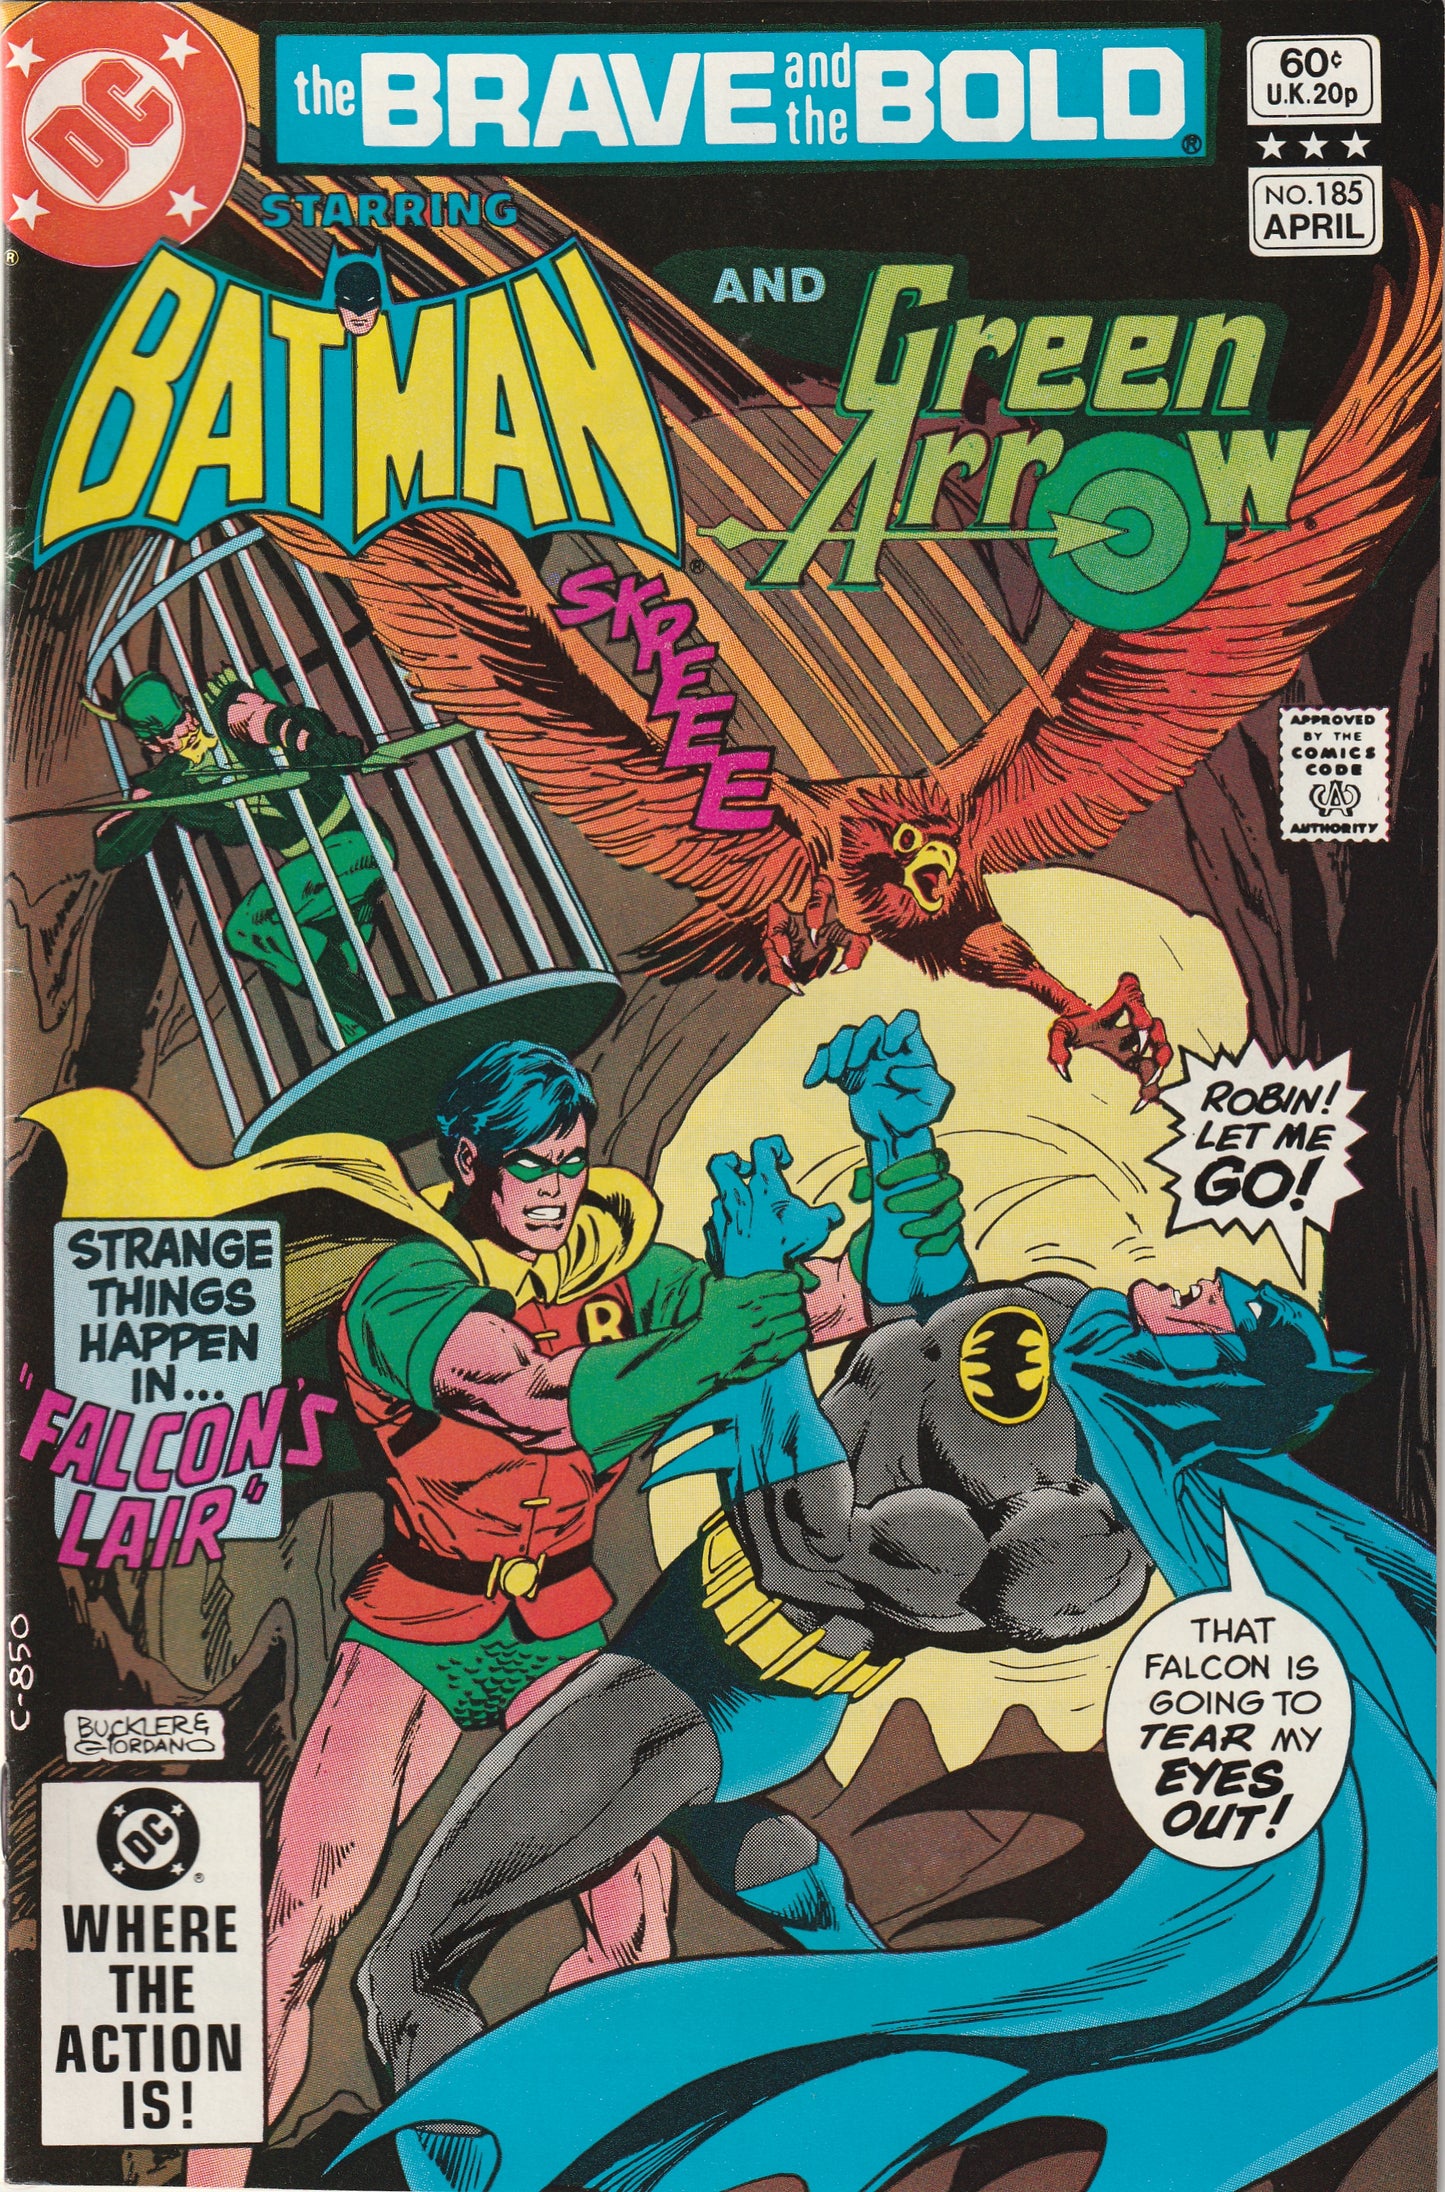 Brave and the Bold #185 (1982) - Batman & Green Arrow